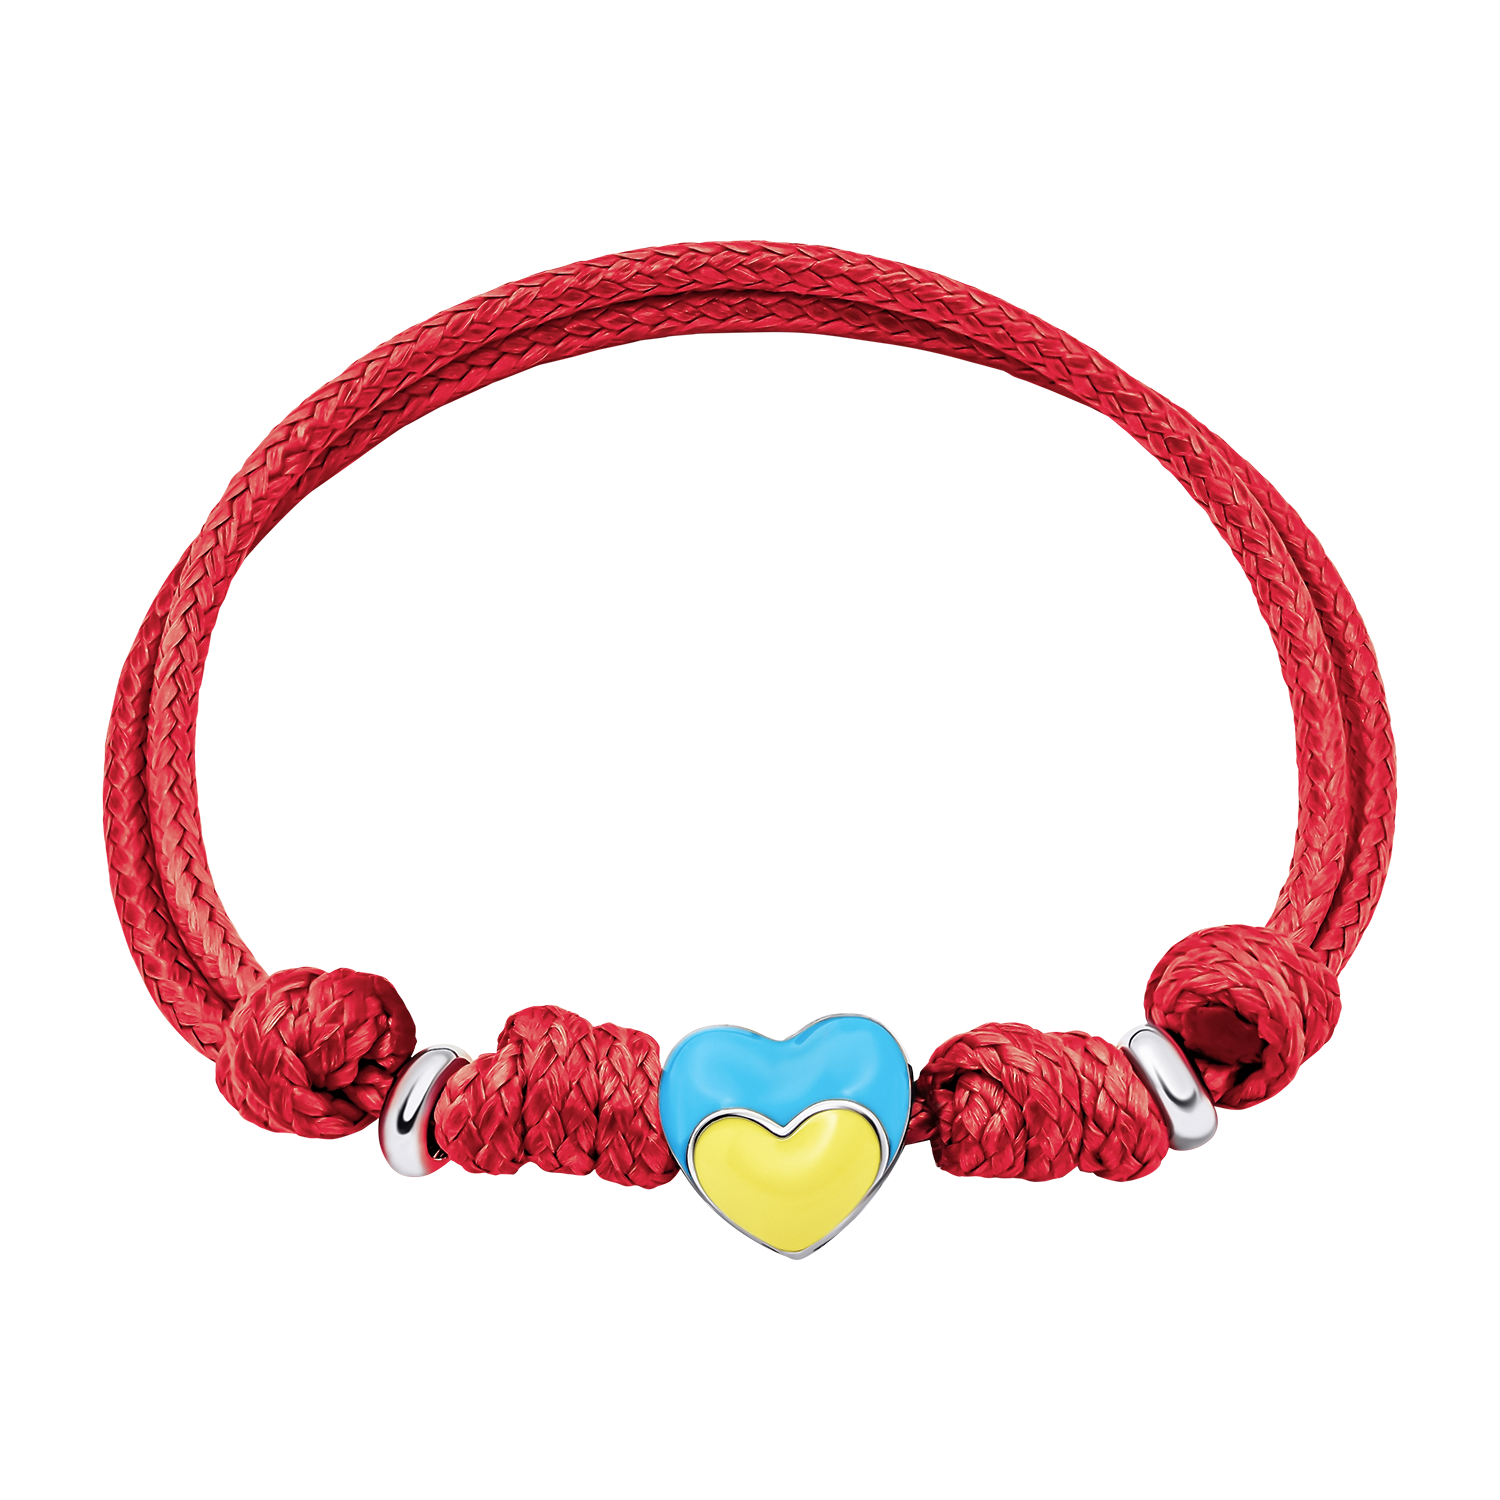 Cord bracelet I'm Ukrainian with a heart with yellow-blue enamel